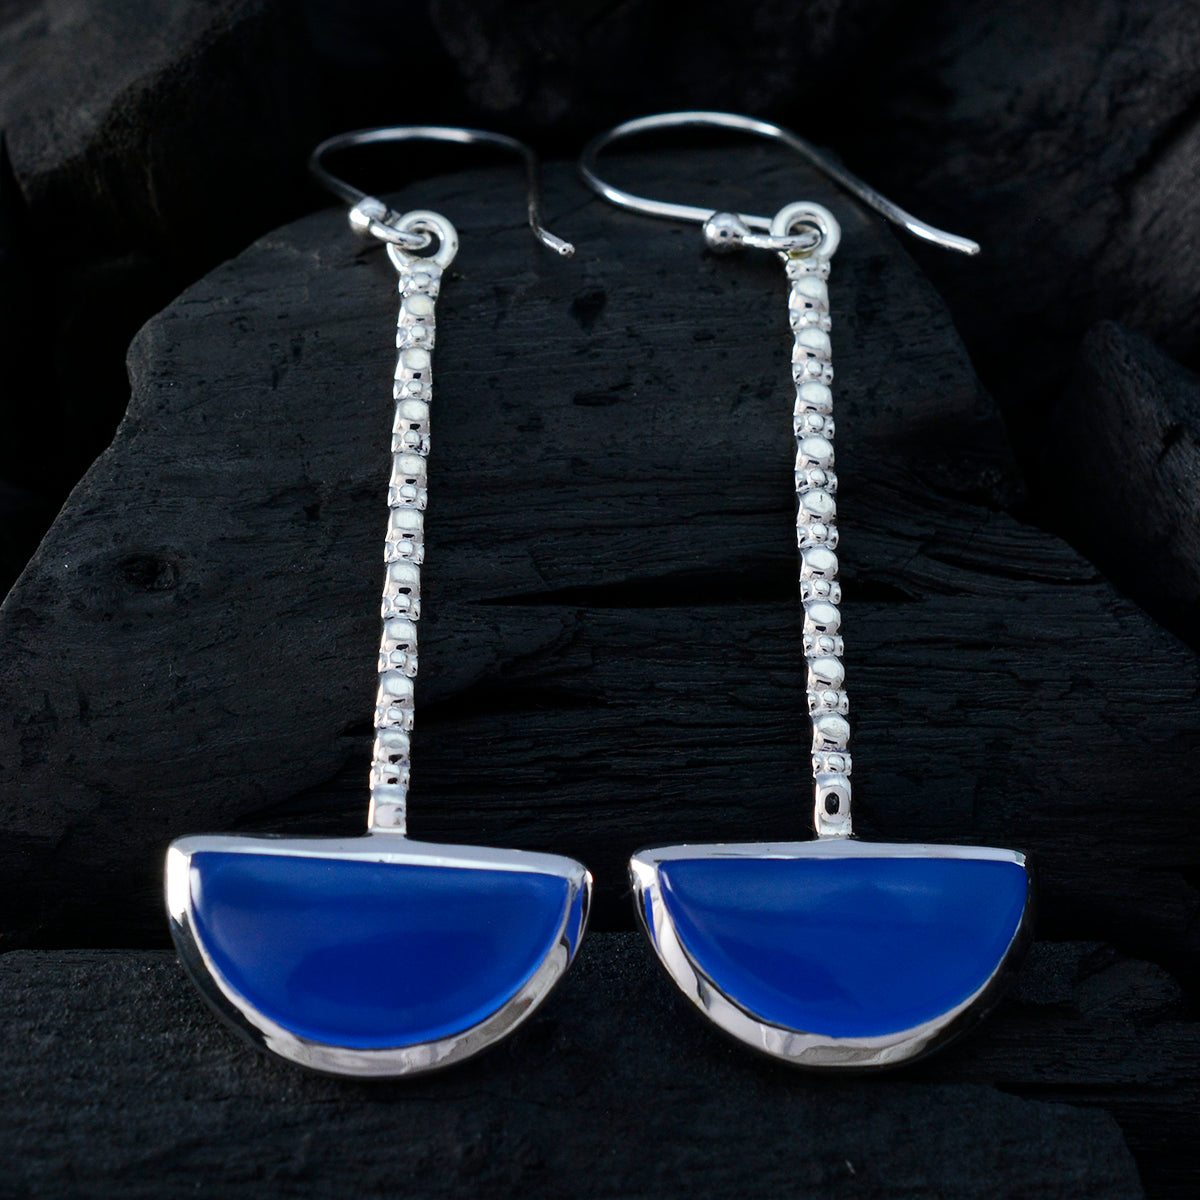 Riyo Genuine Gems fancy Cabochon Blue Chalcedony Silver Earrings gift for college